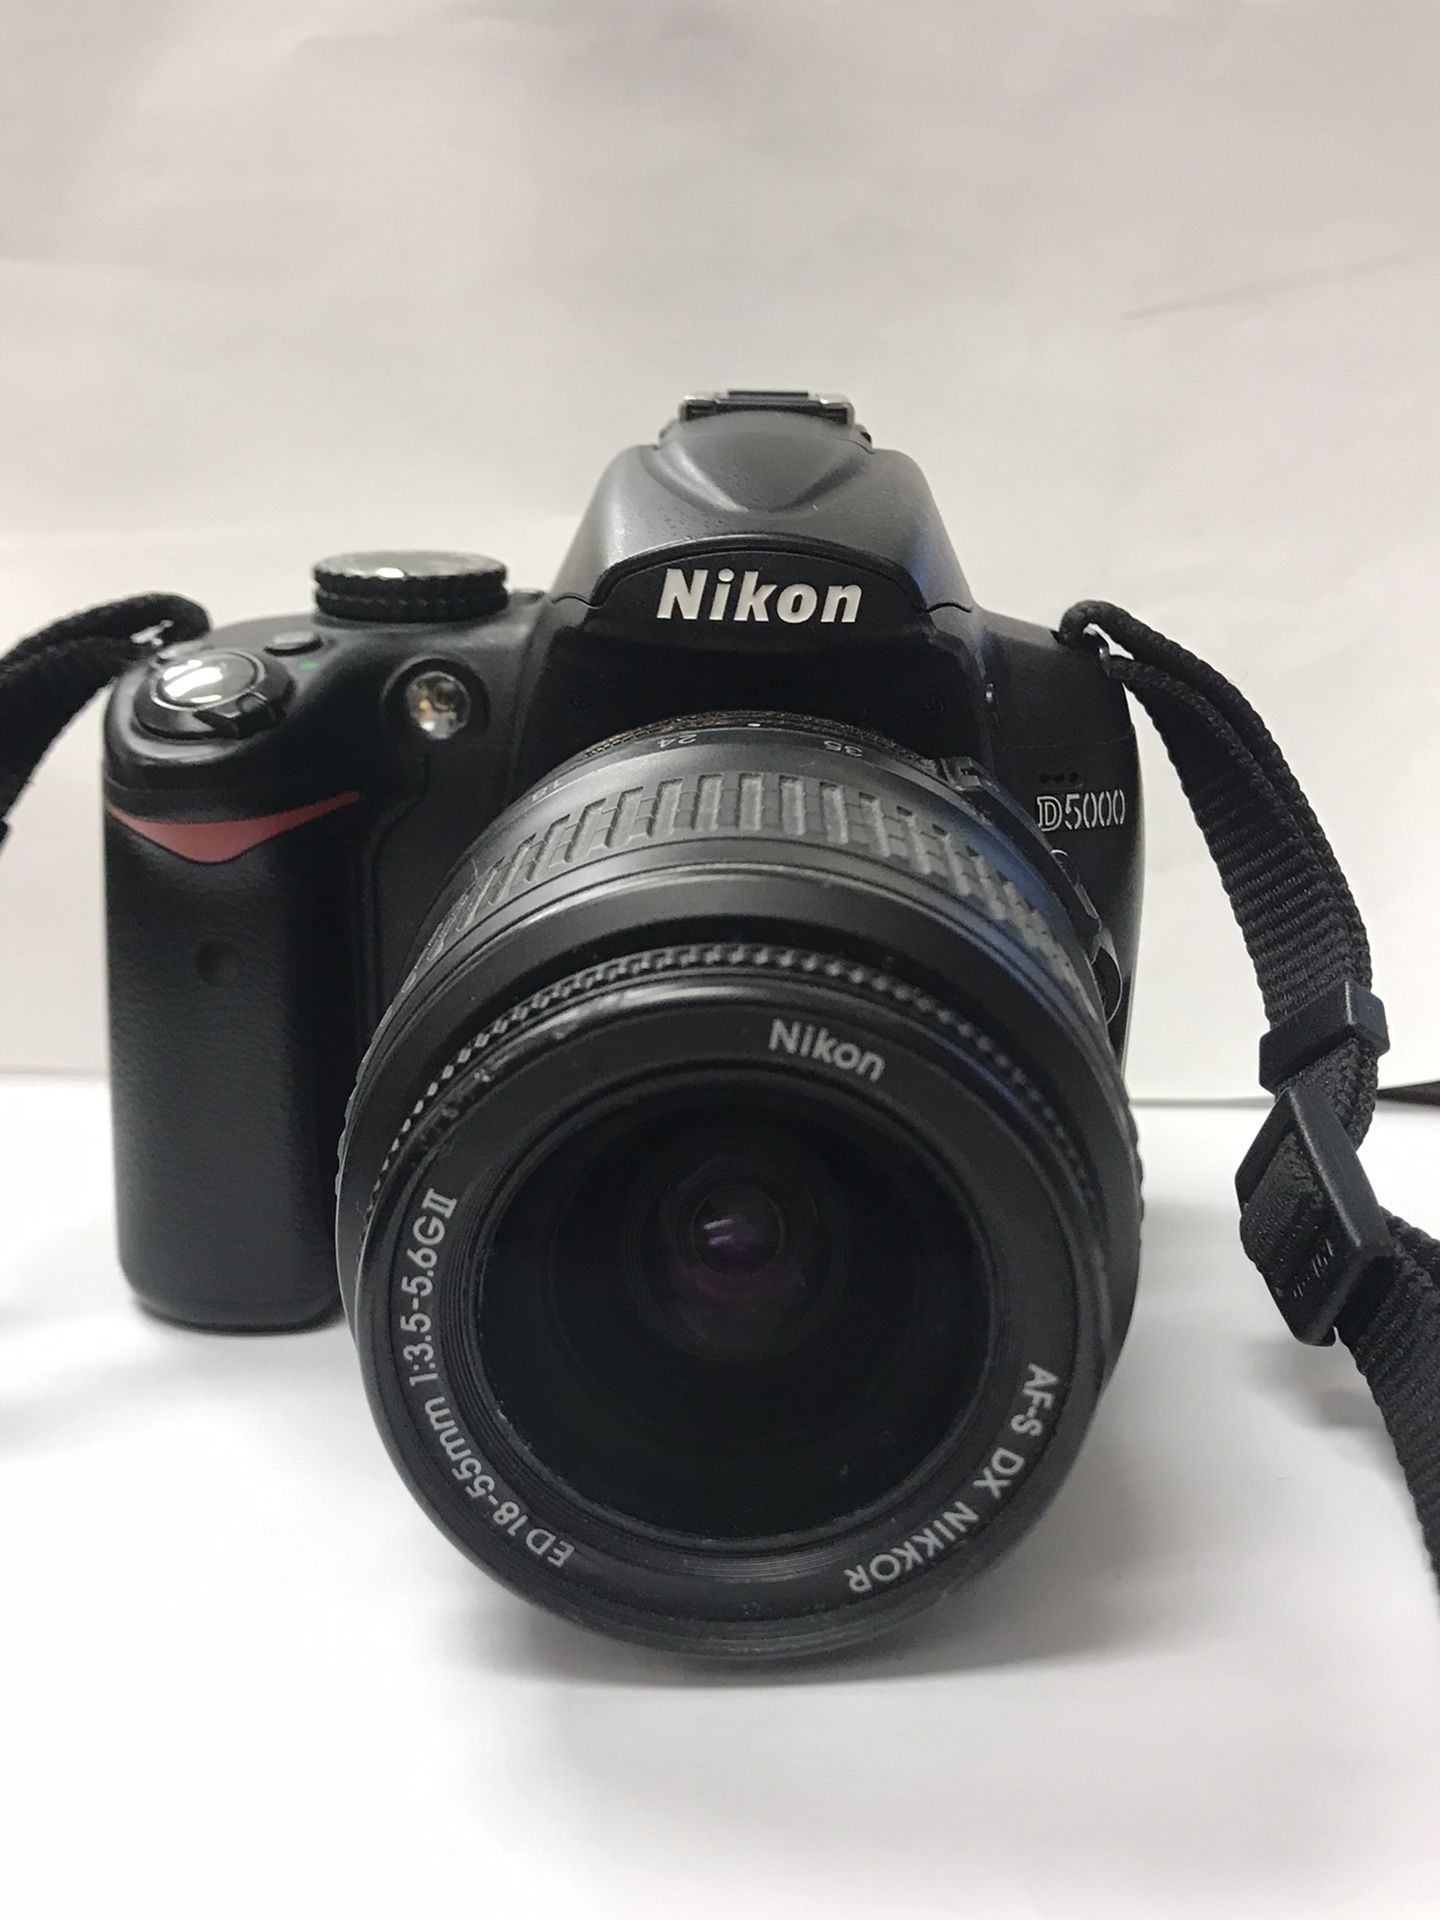 00000000Nikon D5000 Digital Camera with 18-55 Lens